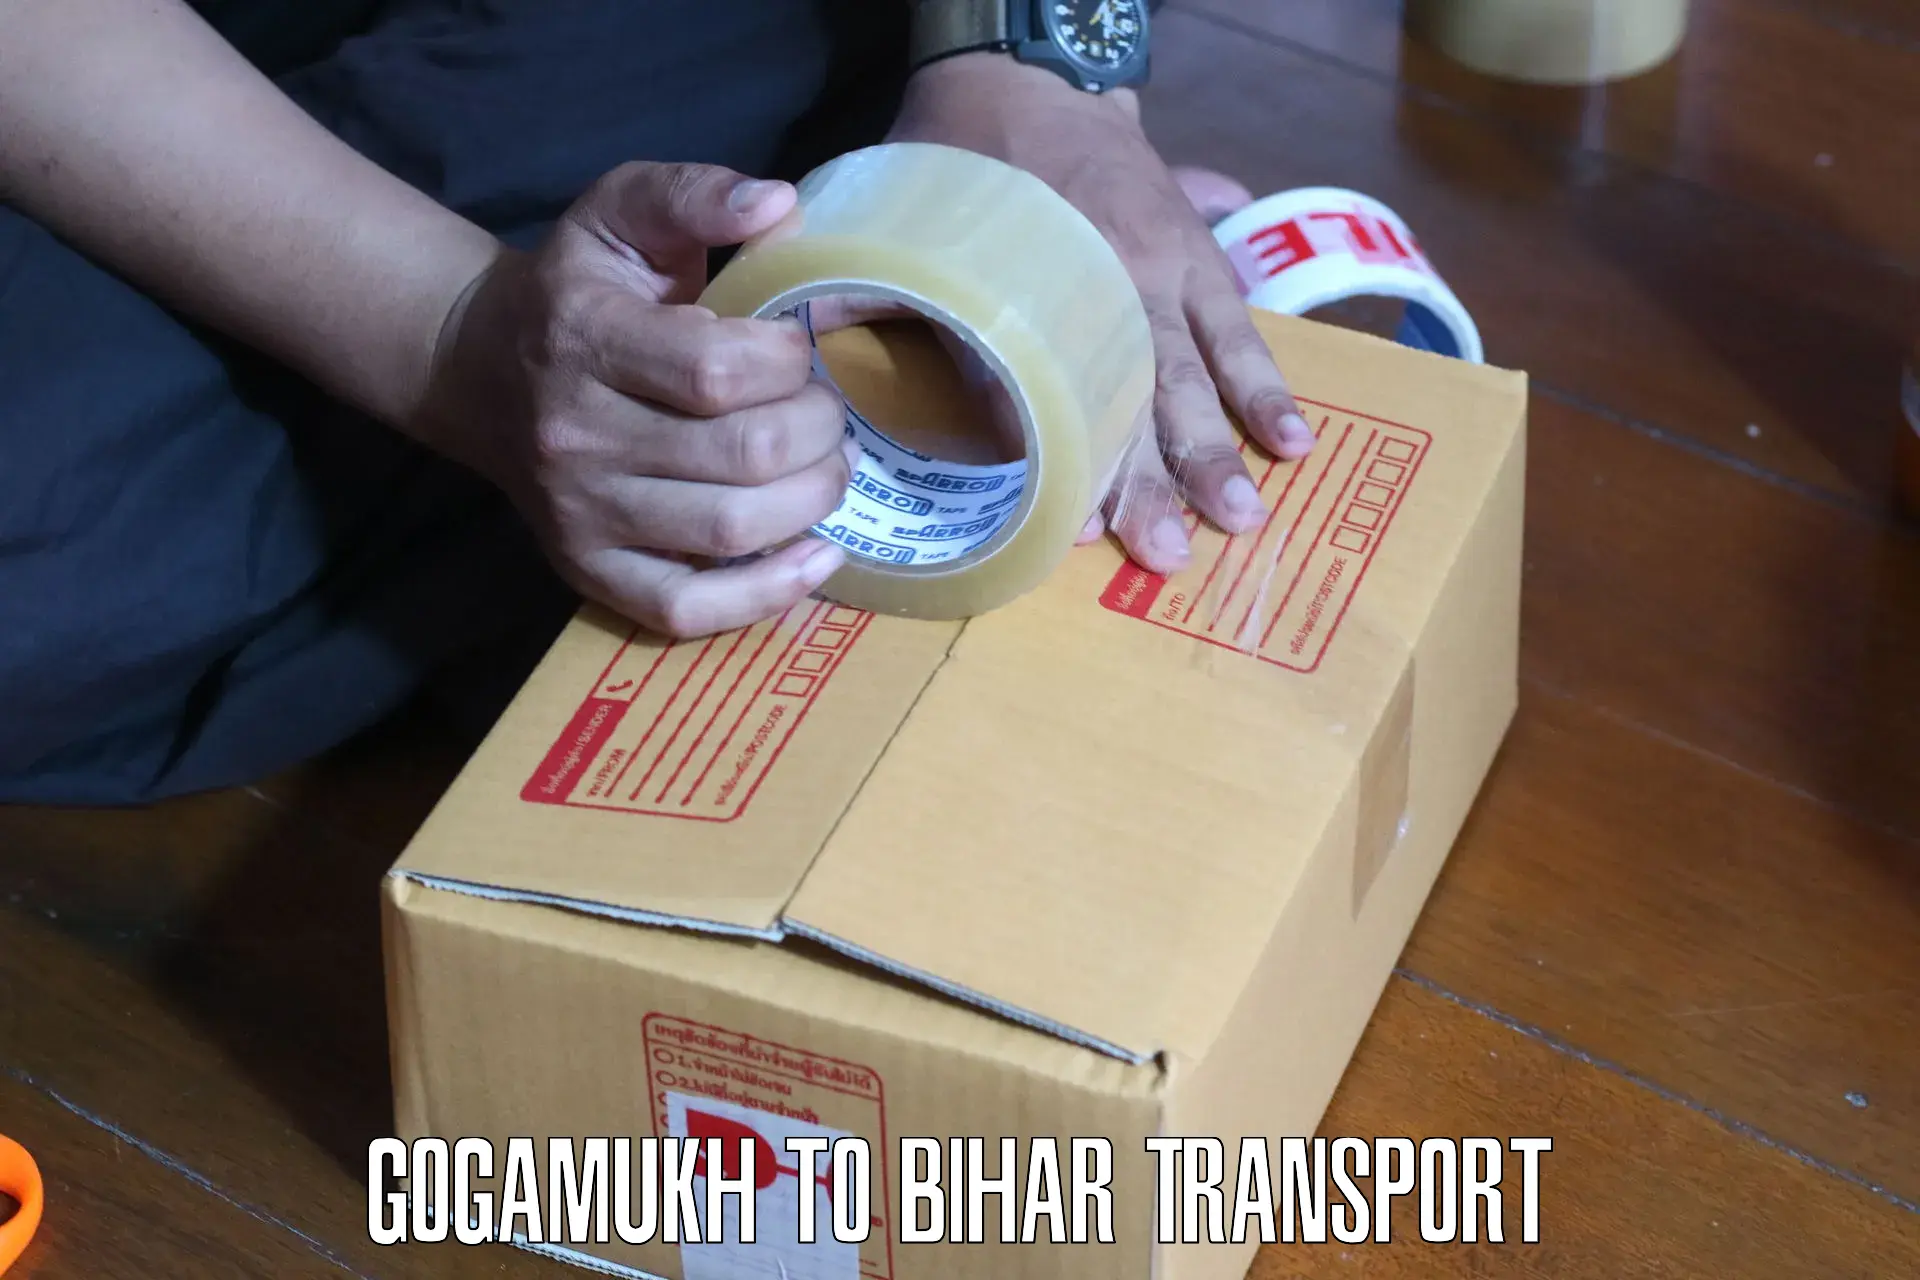 Delivery service Gogamukh to Sandesh